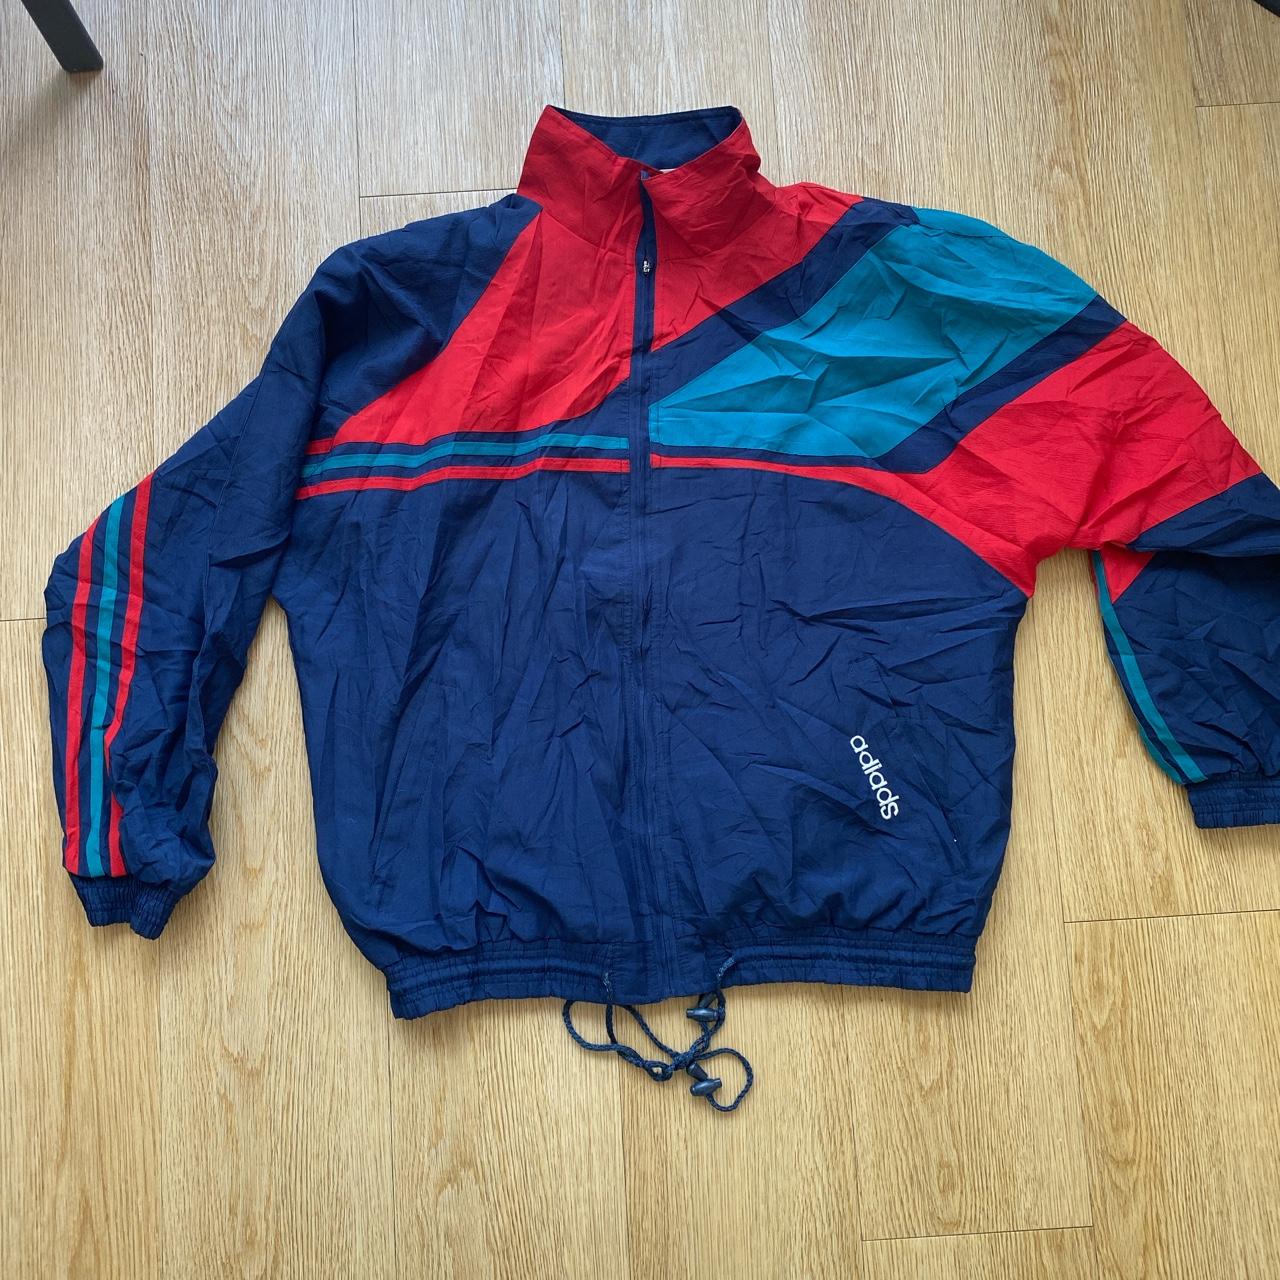 Adidas Men's Jacket | Depop